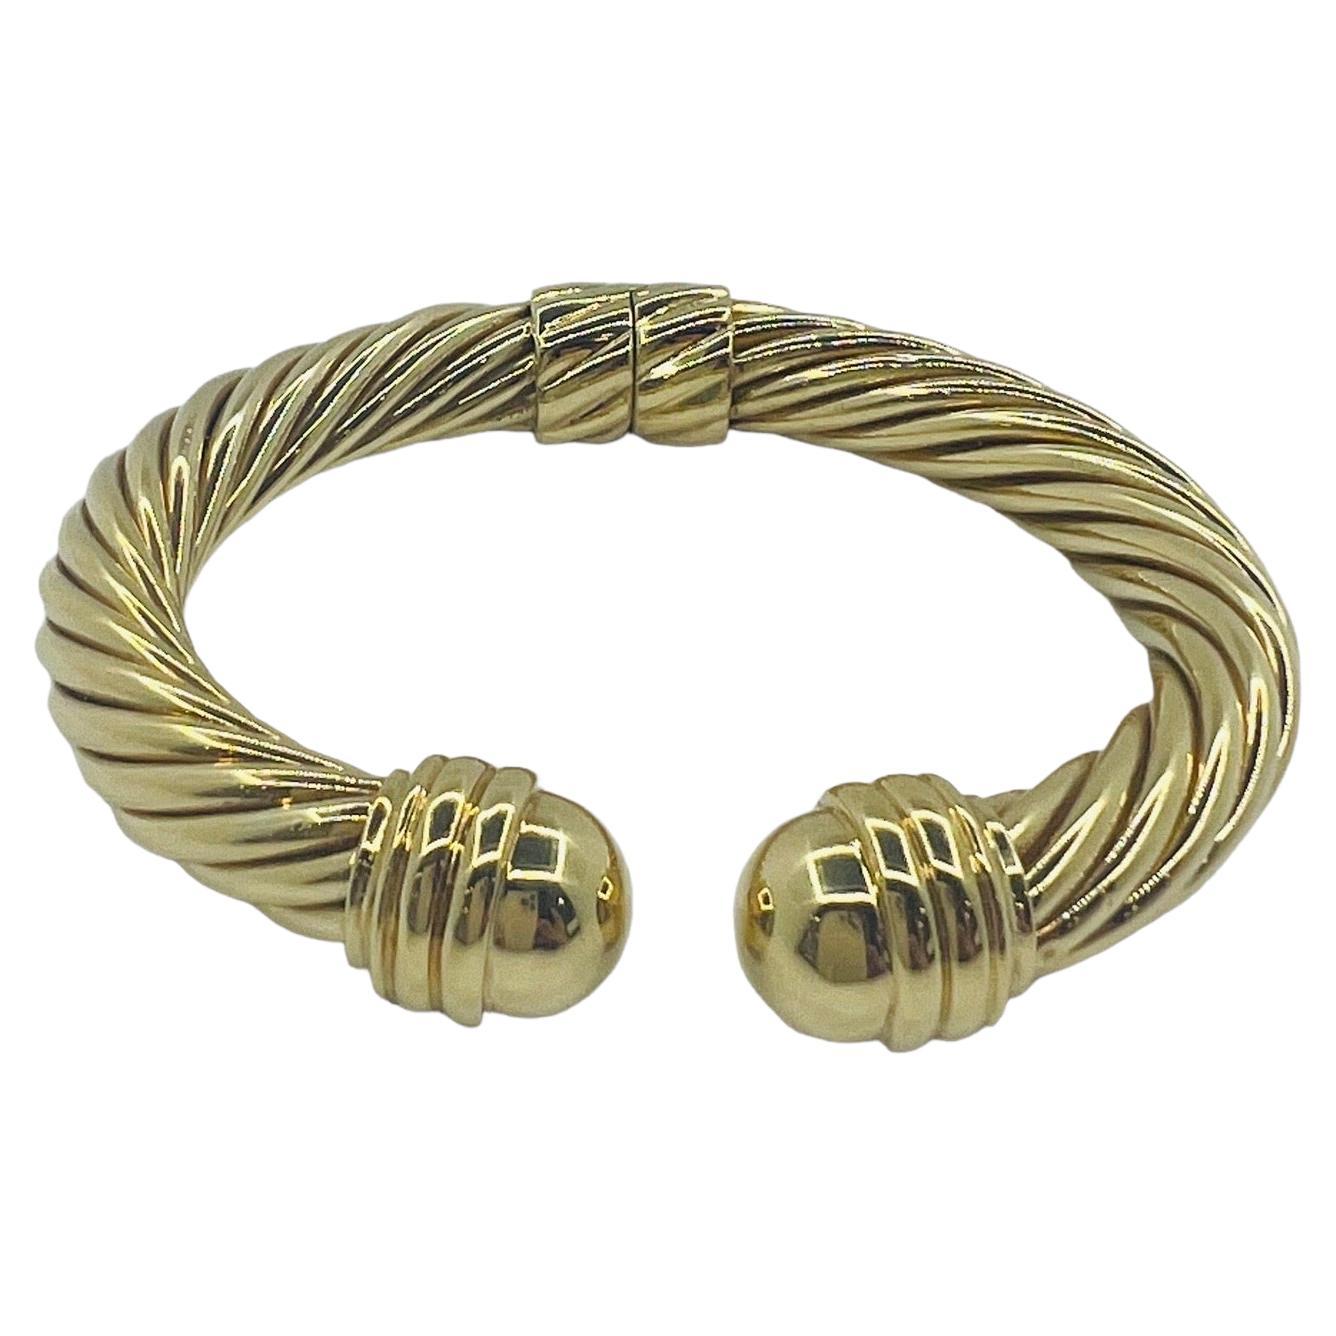 David Yurman Cable Collection Cuff Bracelet, 18k Yellow Gold